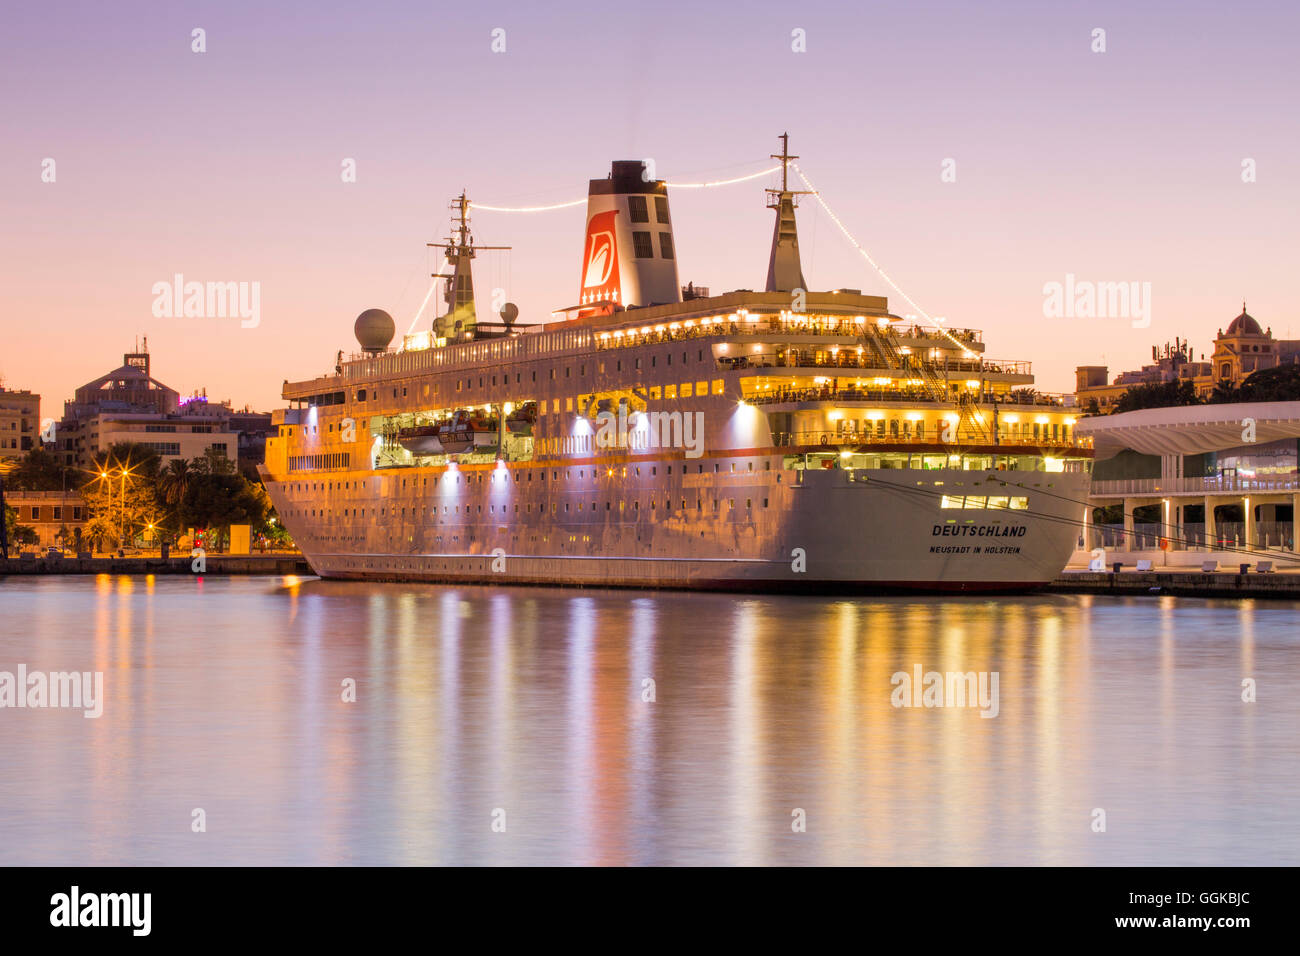 Cruise ship MS Deutschland (Reederei Peter Deilmann) at Malaga Cruise Terminal at dusk, Malaga, Andalusia, Spain Stock Photo